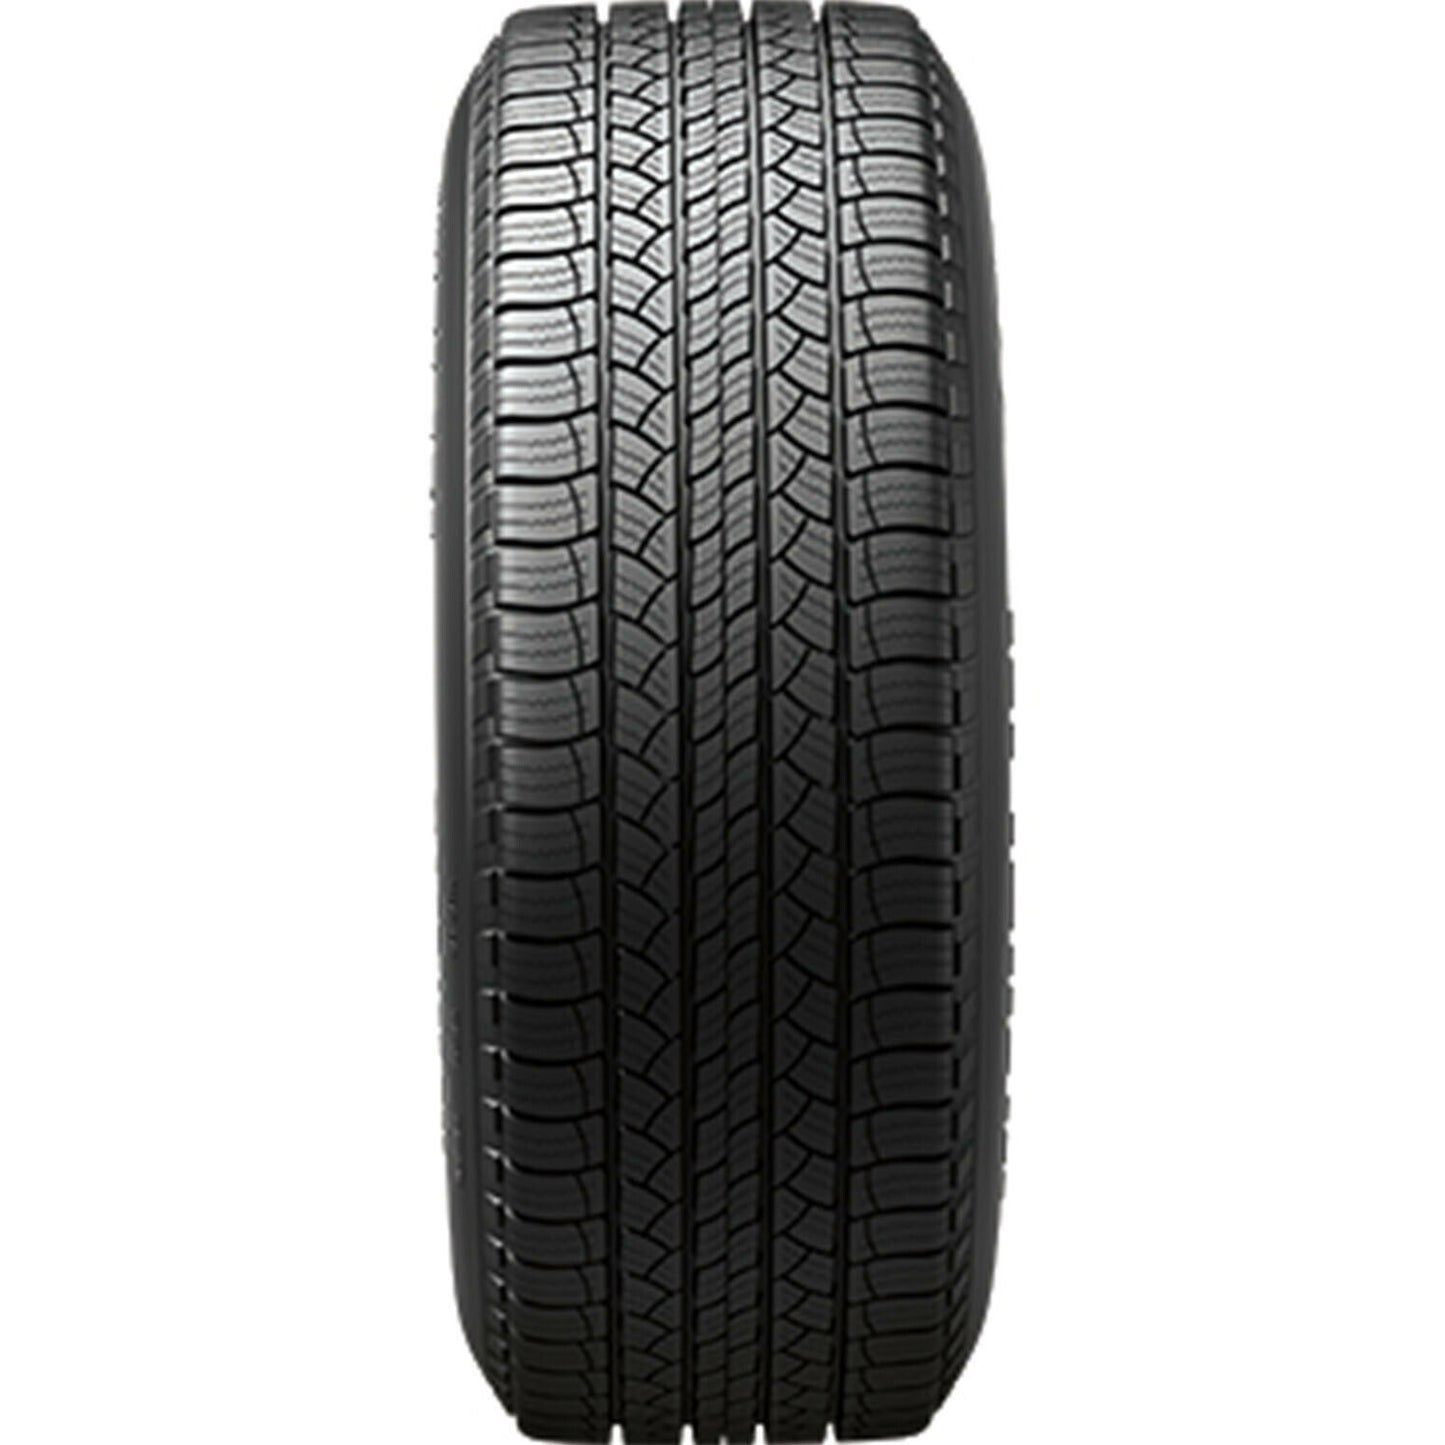 1 New Michelin Latitude Tour - P225/65r17 Tires 2256517 225 65 17